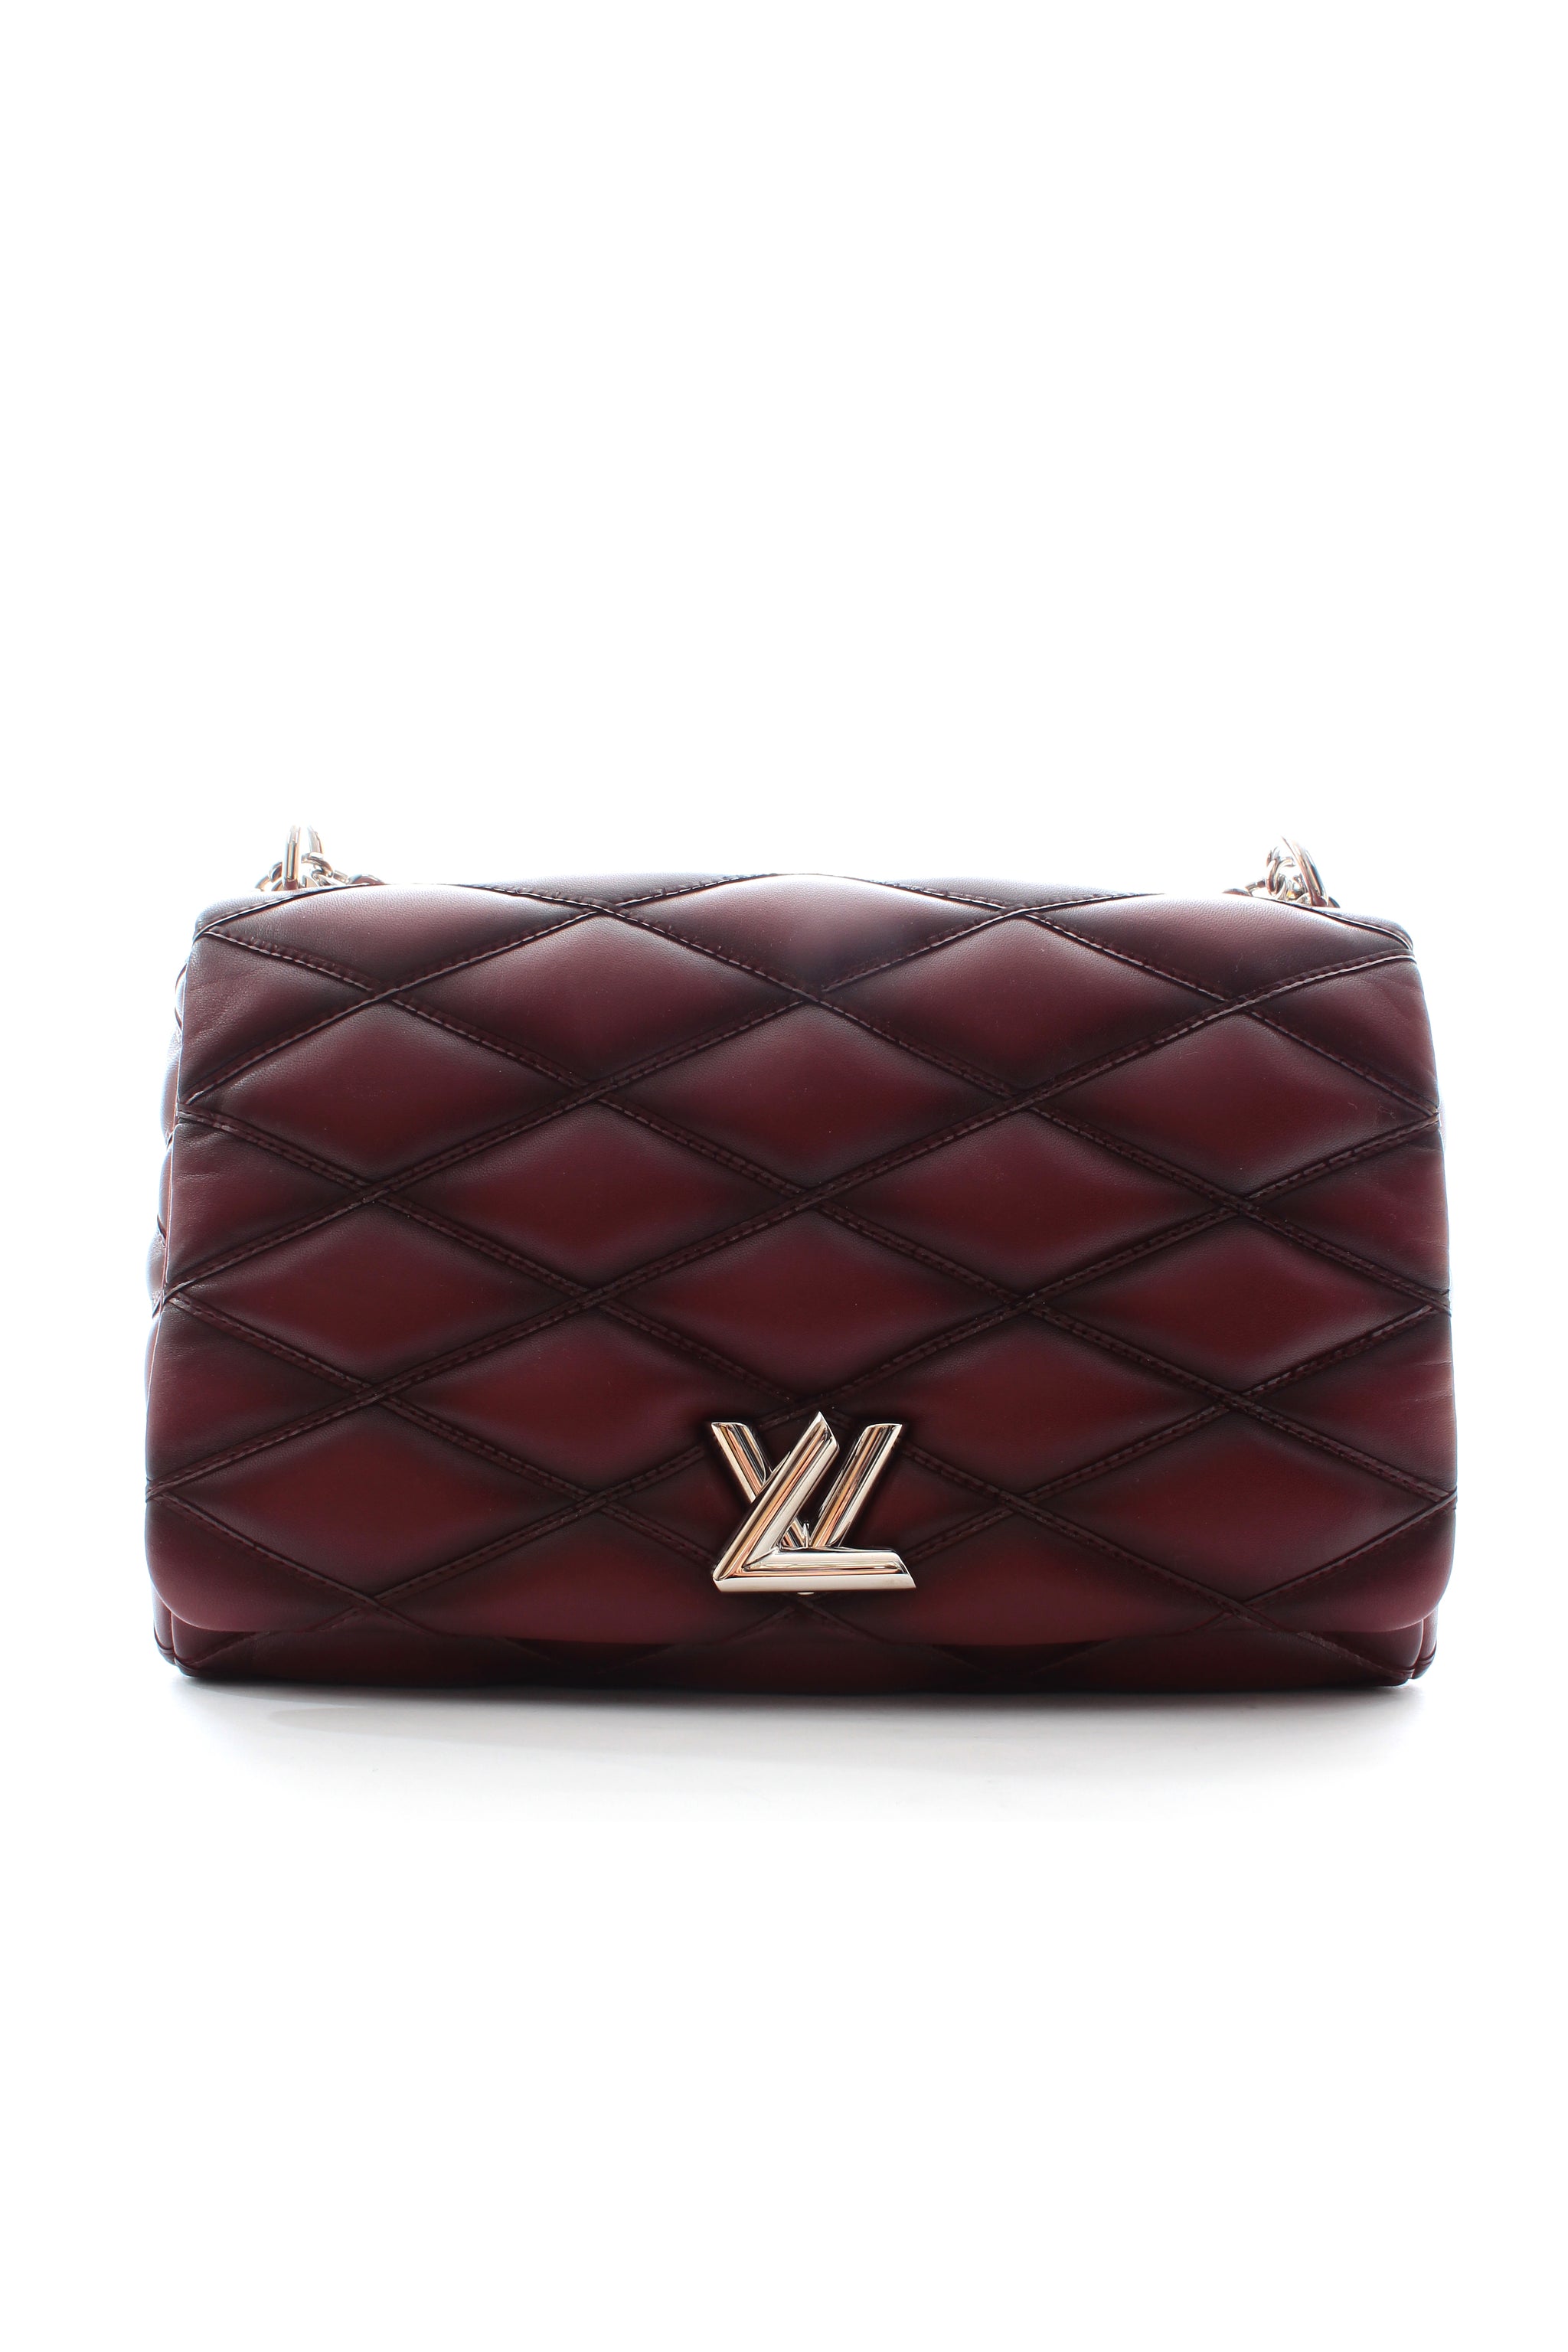 Louis Vuitton GO-14 Malletage – The Clawset